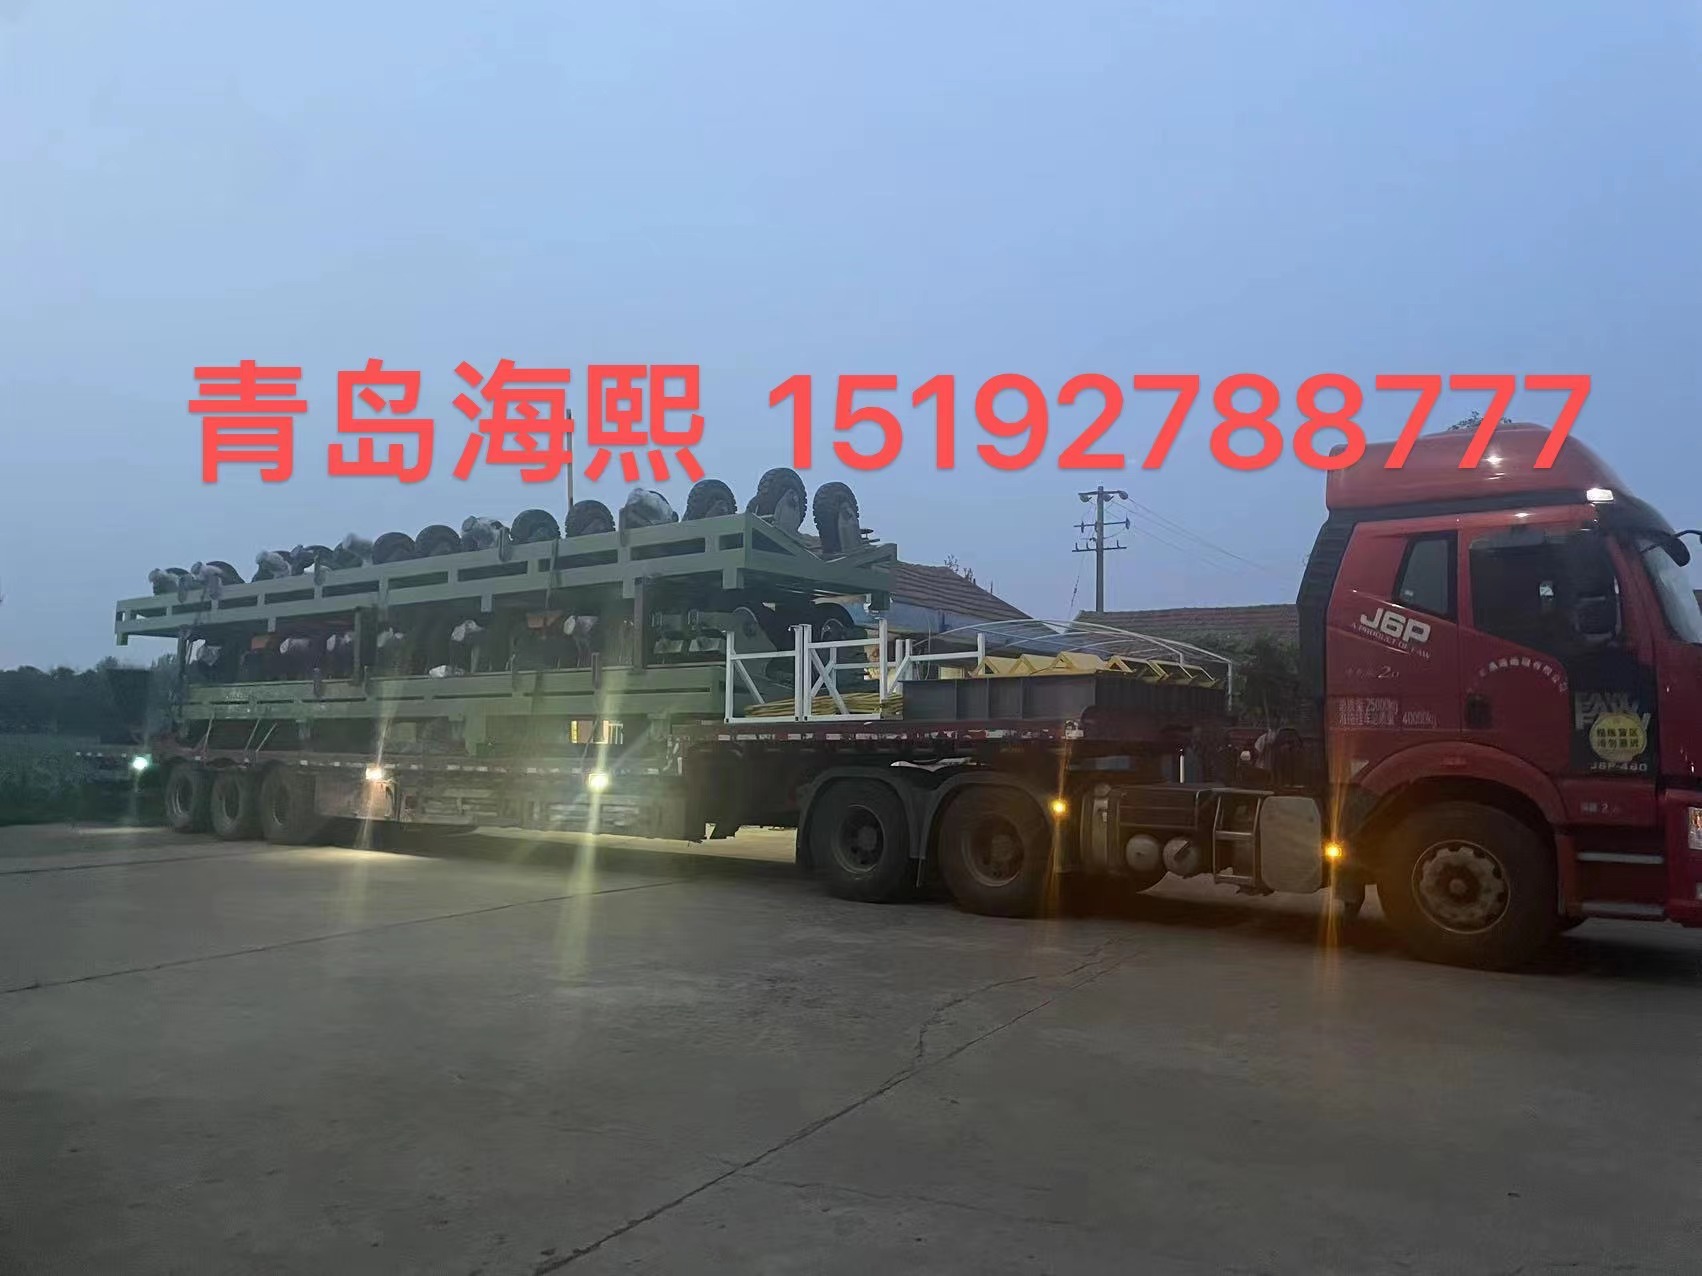 Hebei Huadun pipe manufacturing Co., Ltd. third car